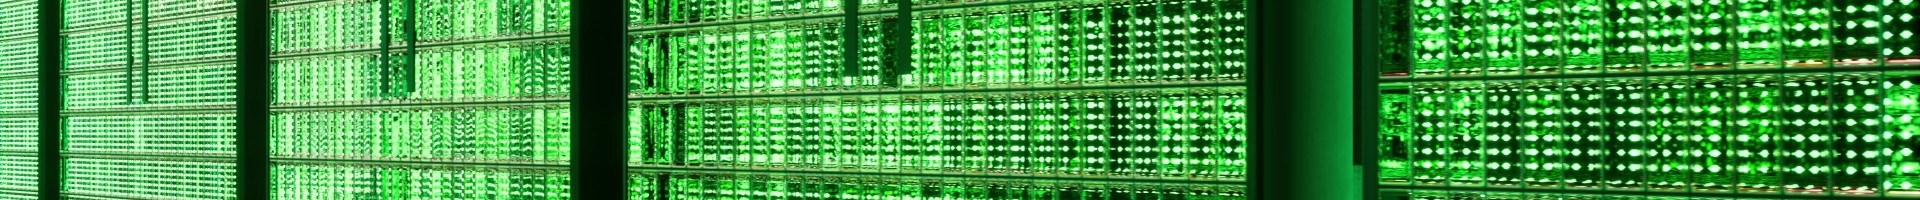 Groene datacenters